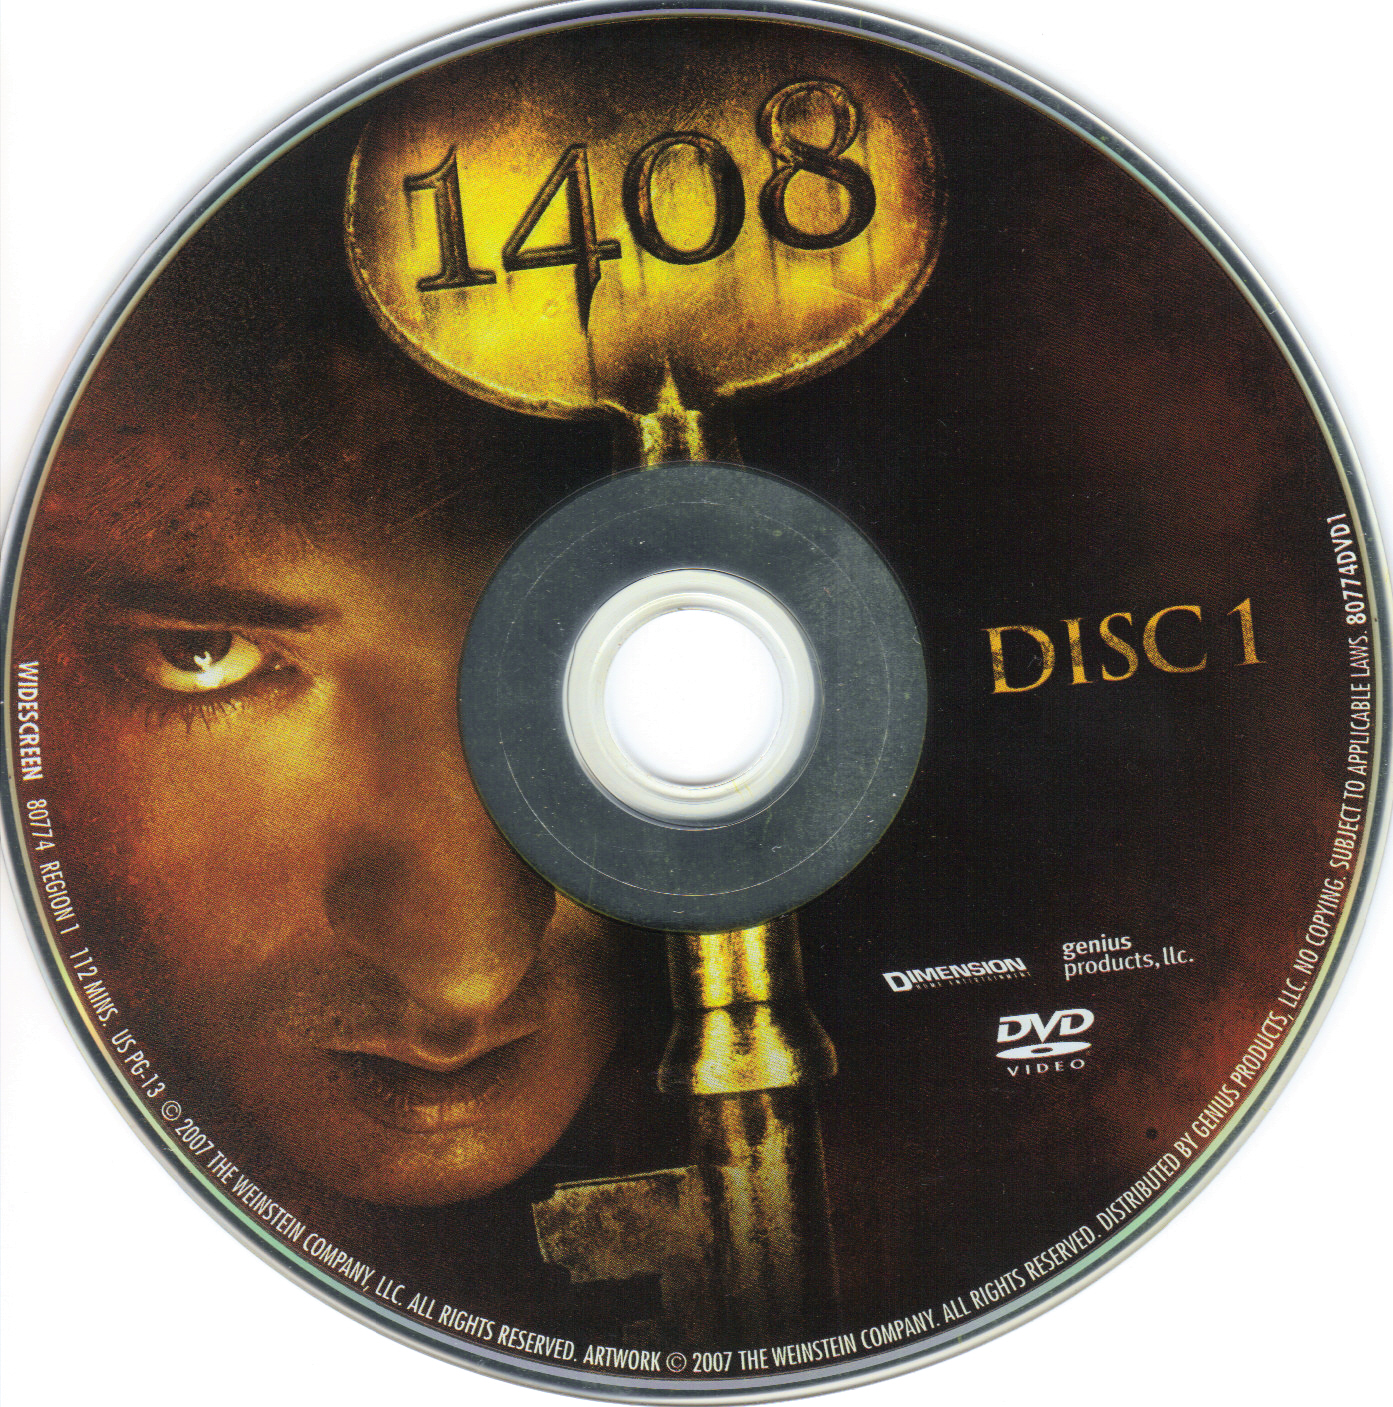 1408 DISC 1